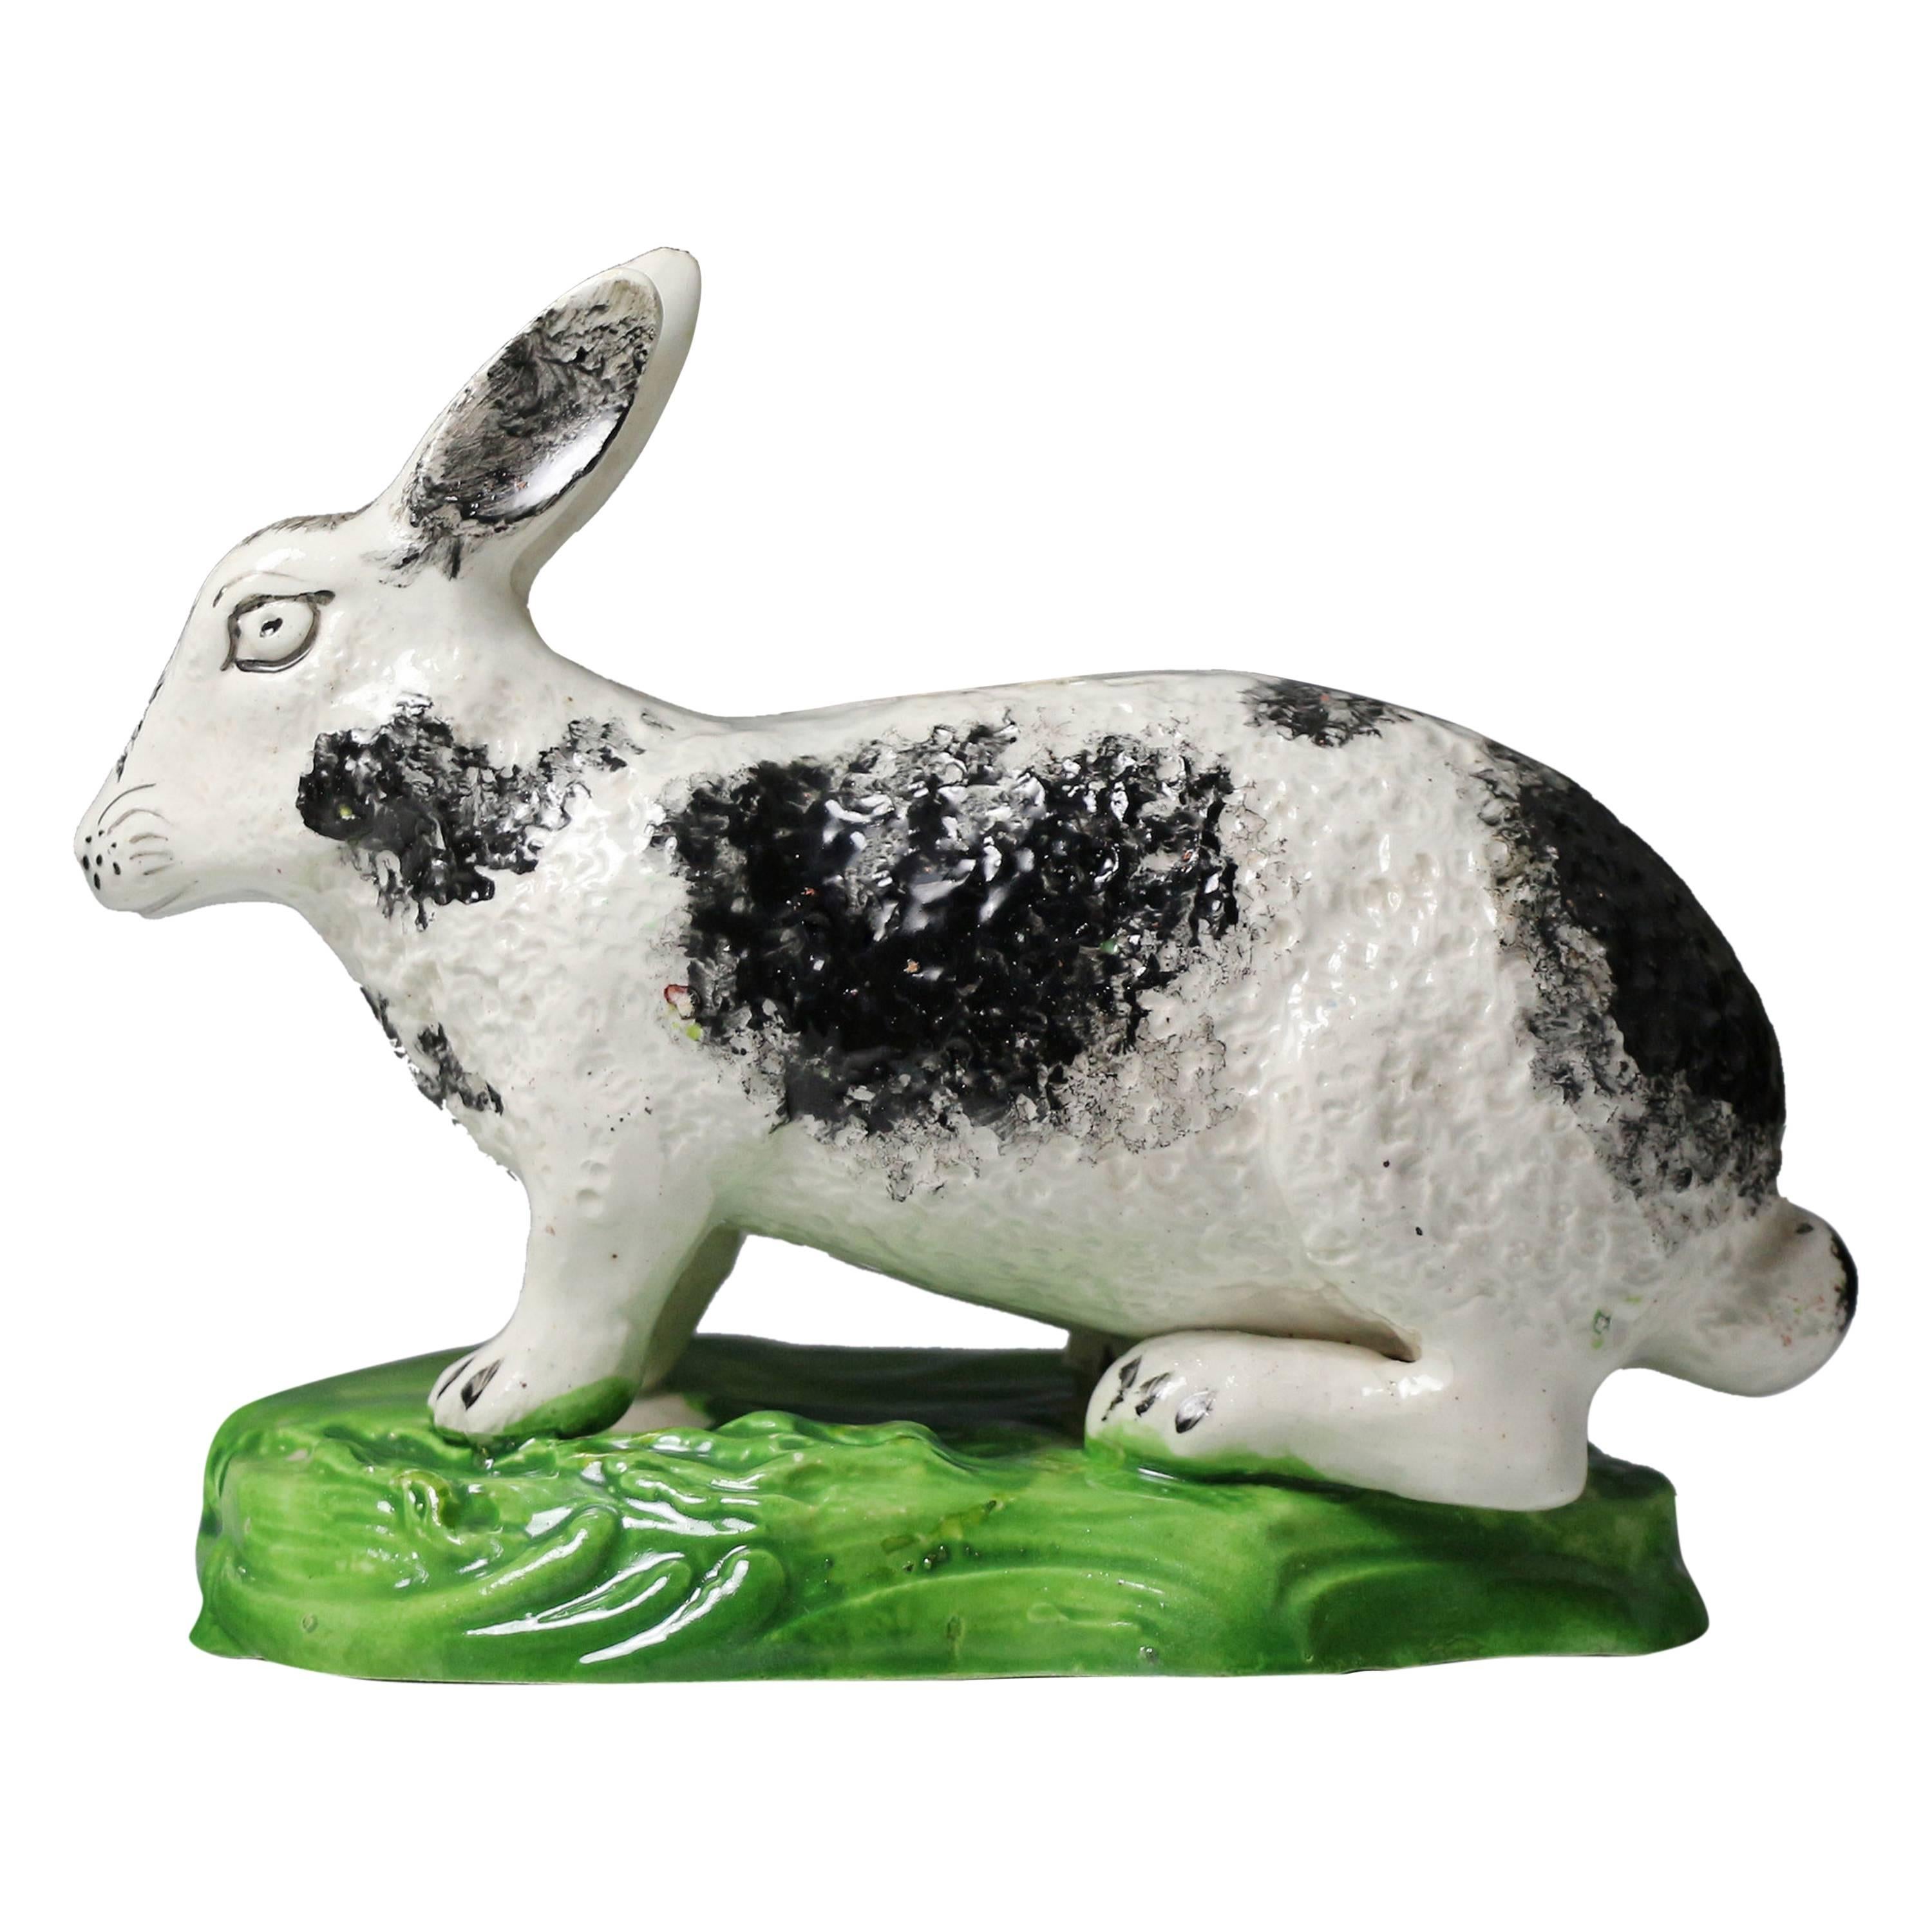 English pottery figure a rabbit on green oval base. c1840